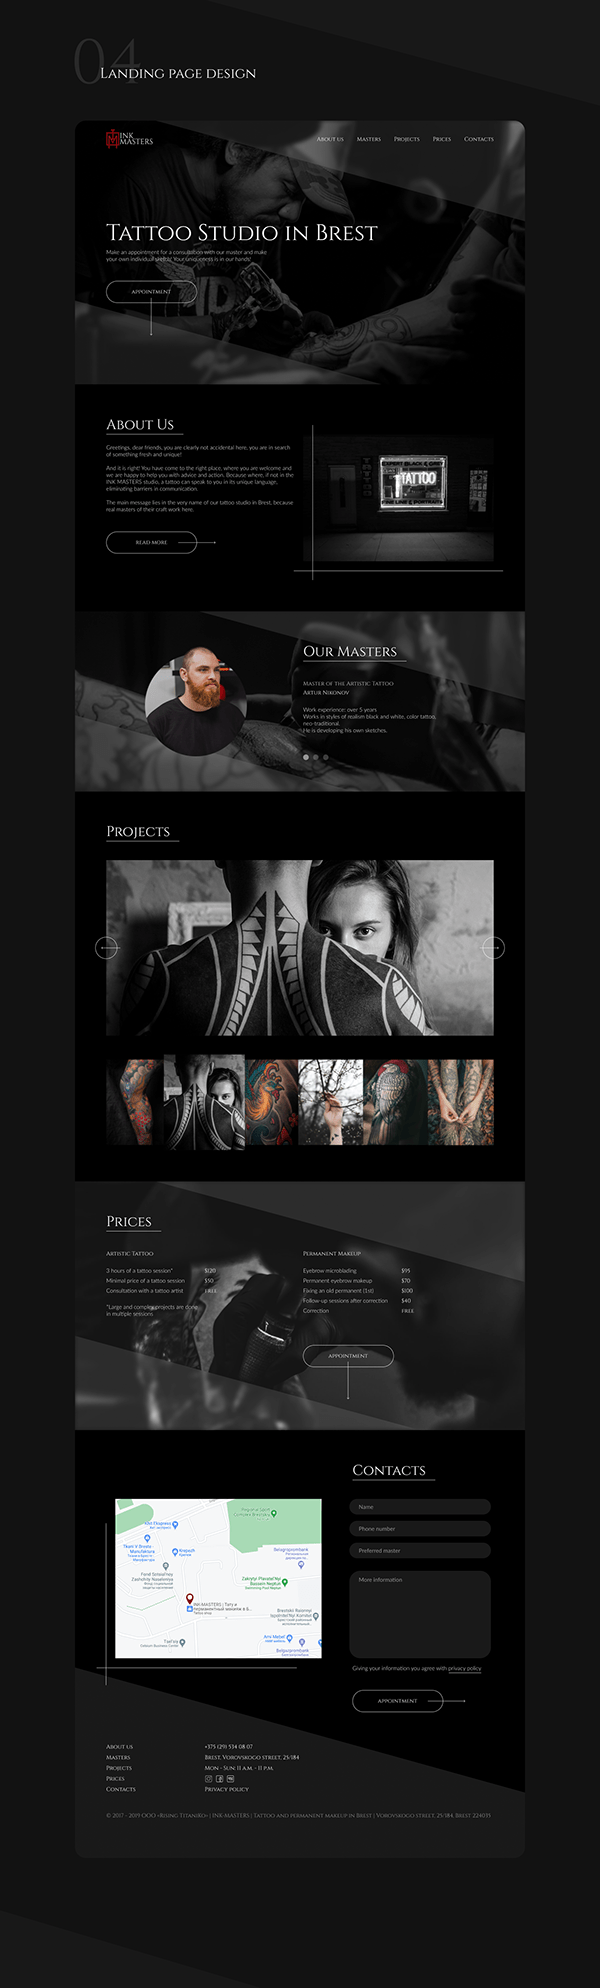 Tattoo studio - Landing page | Web design concept